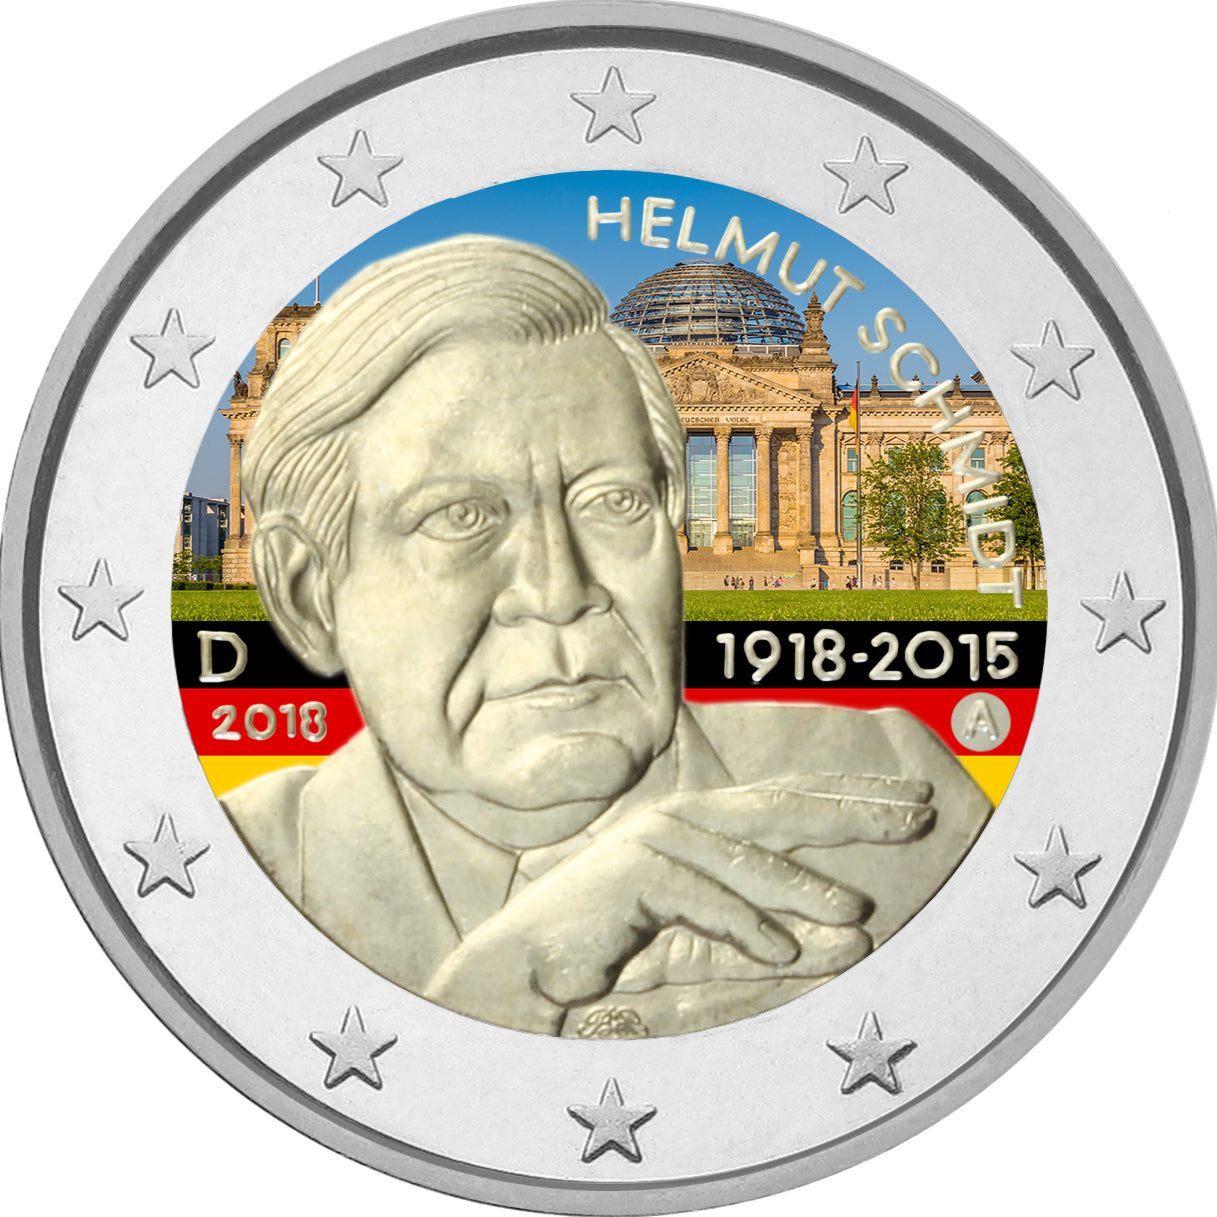 Germany - 2 Euro Colored 2018, Helmut Schmidt.